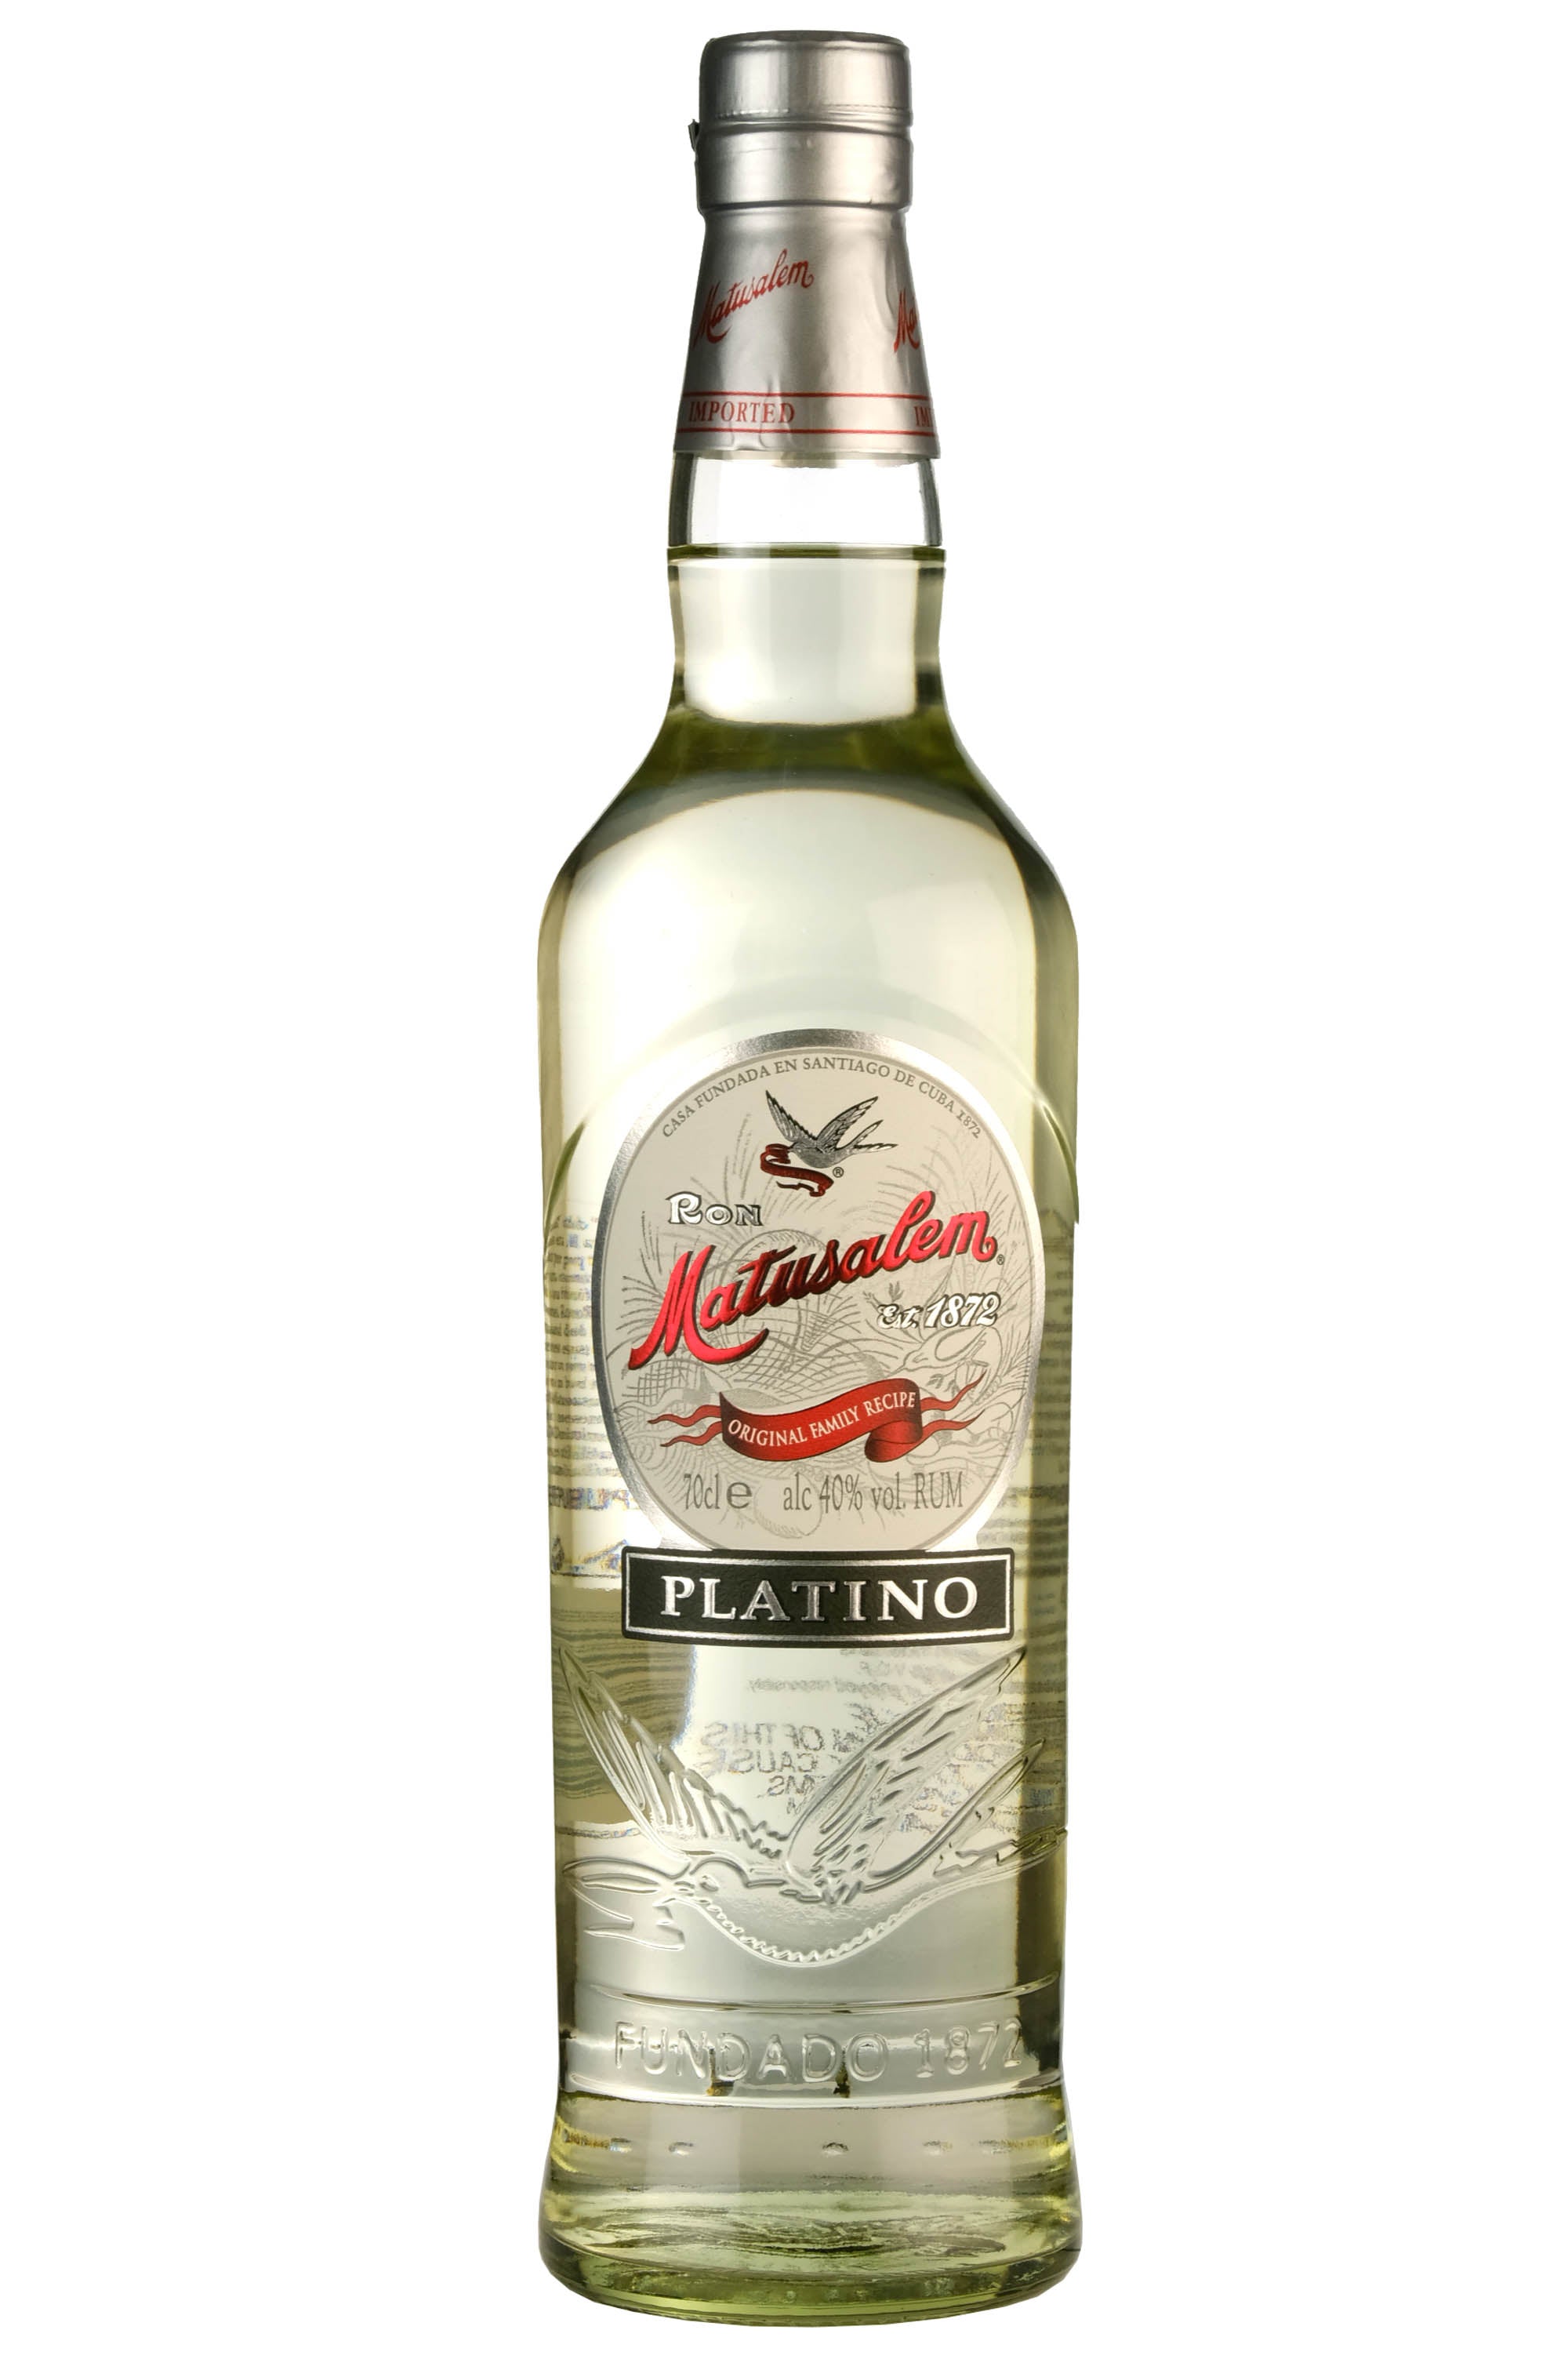 Matusalem Platino Rum